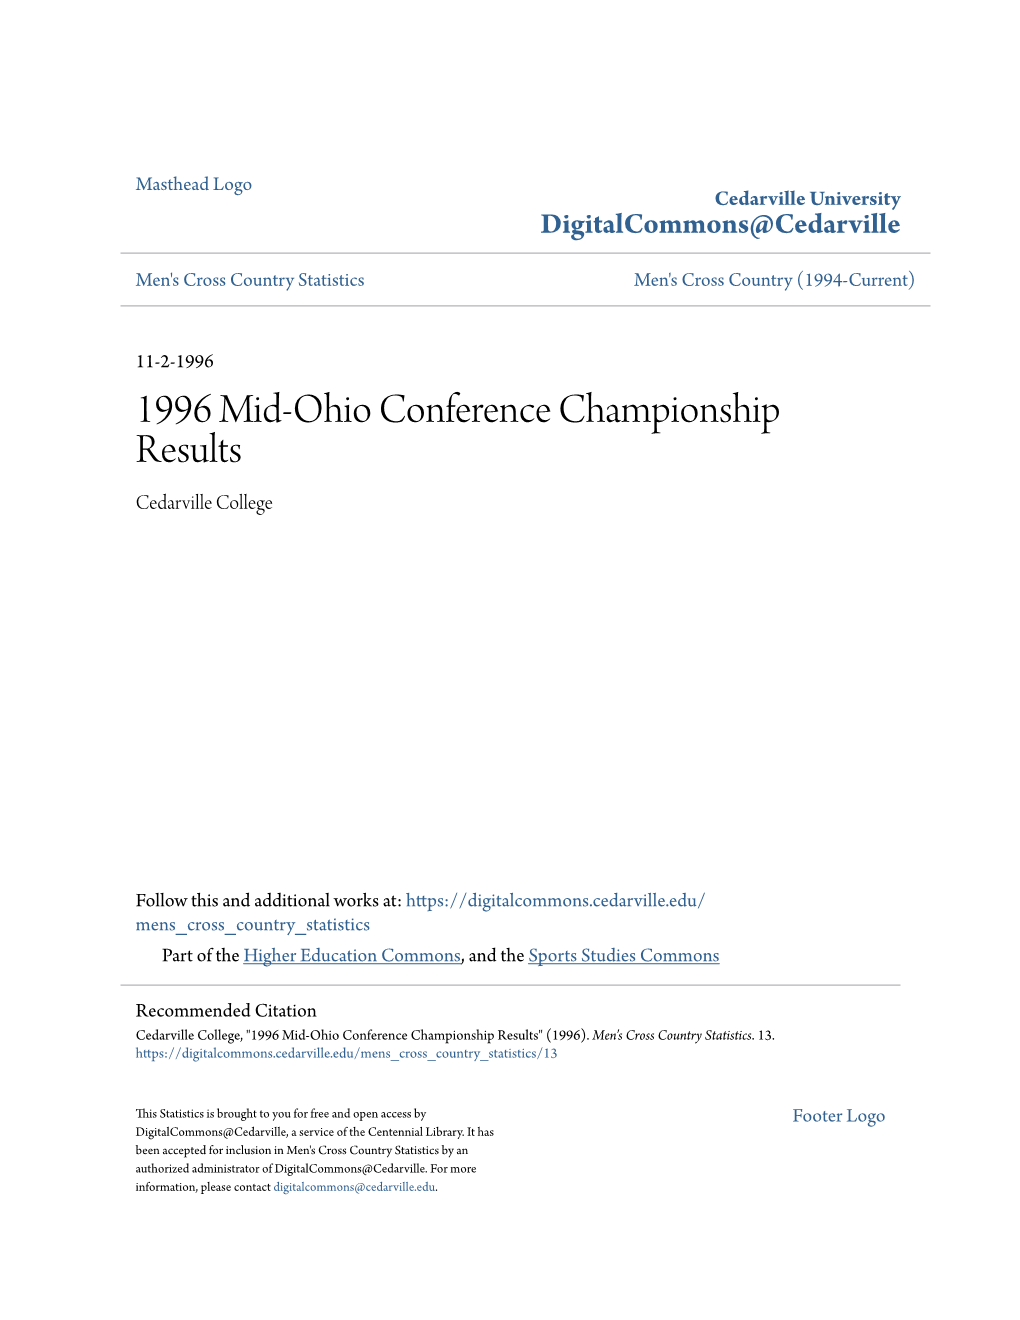 1996 Mid-Ohio Conference Championship Results Cedarville College